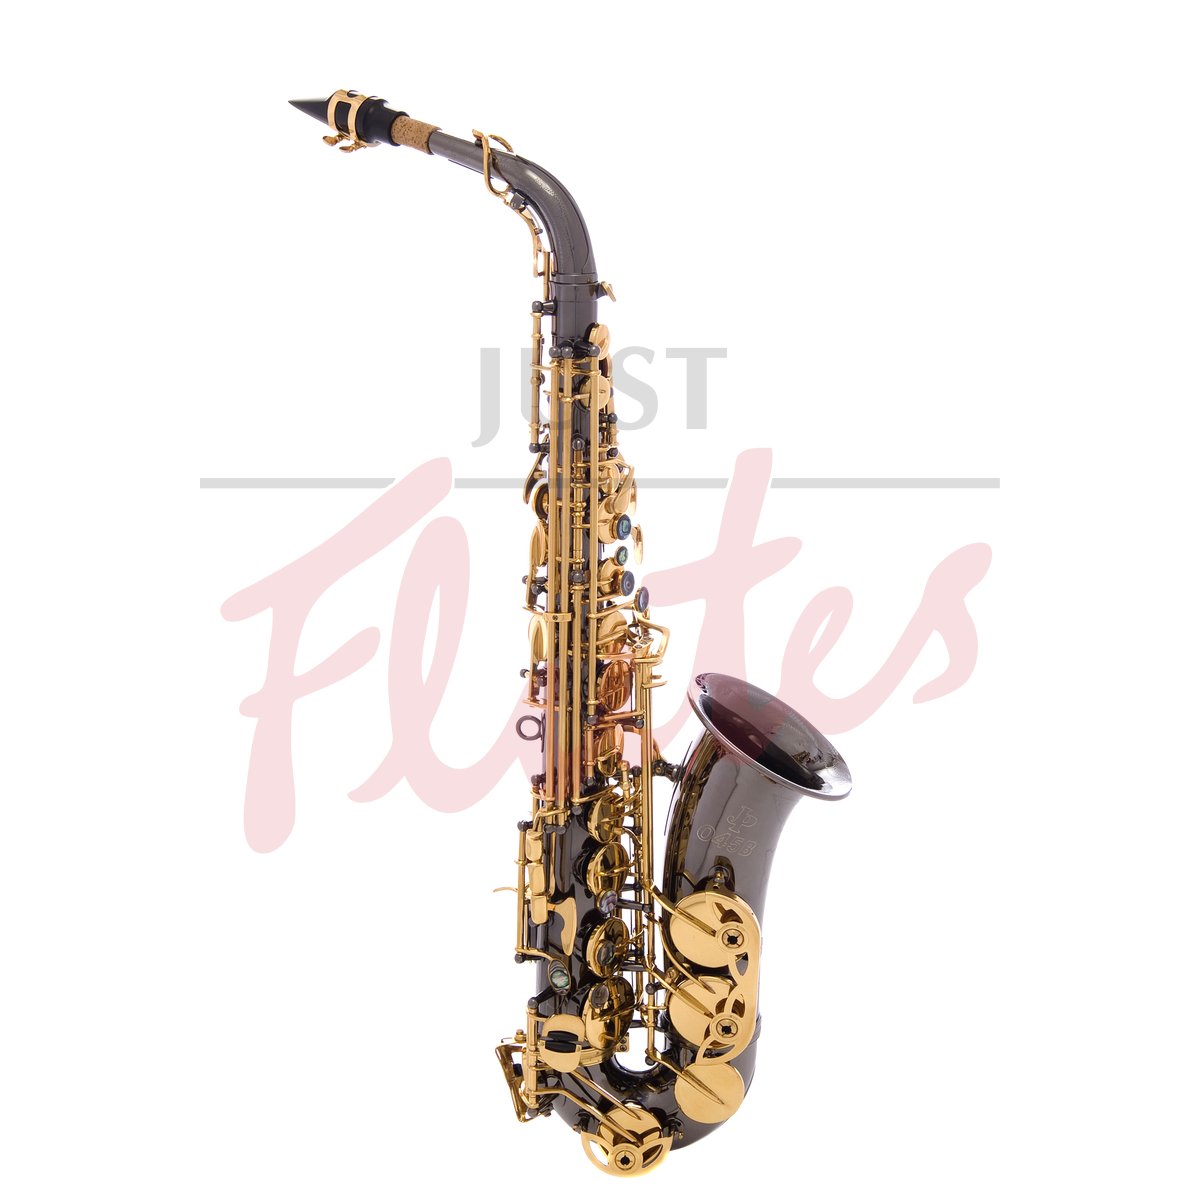 JP045 Alto Saxophone. Just Flutes, award-winning UK store